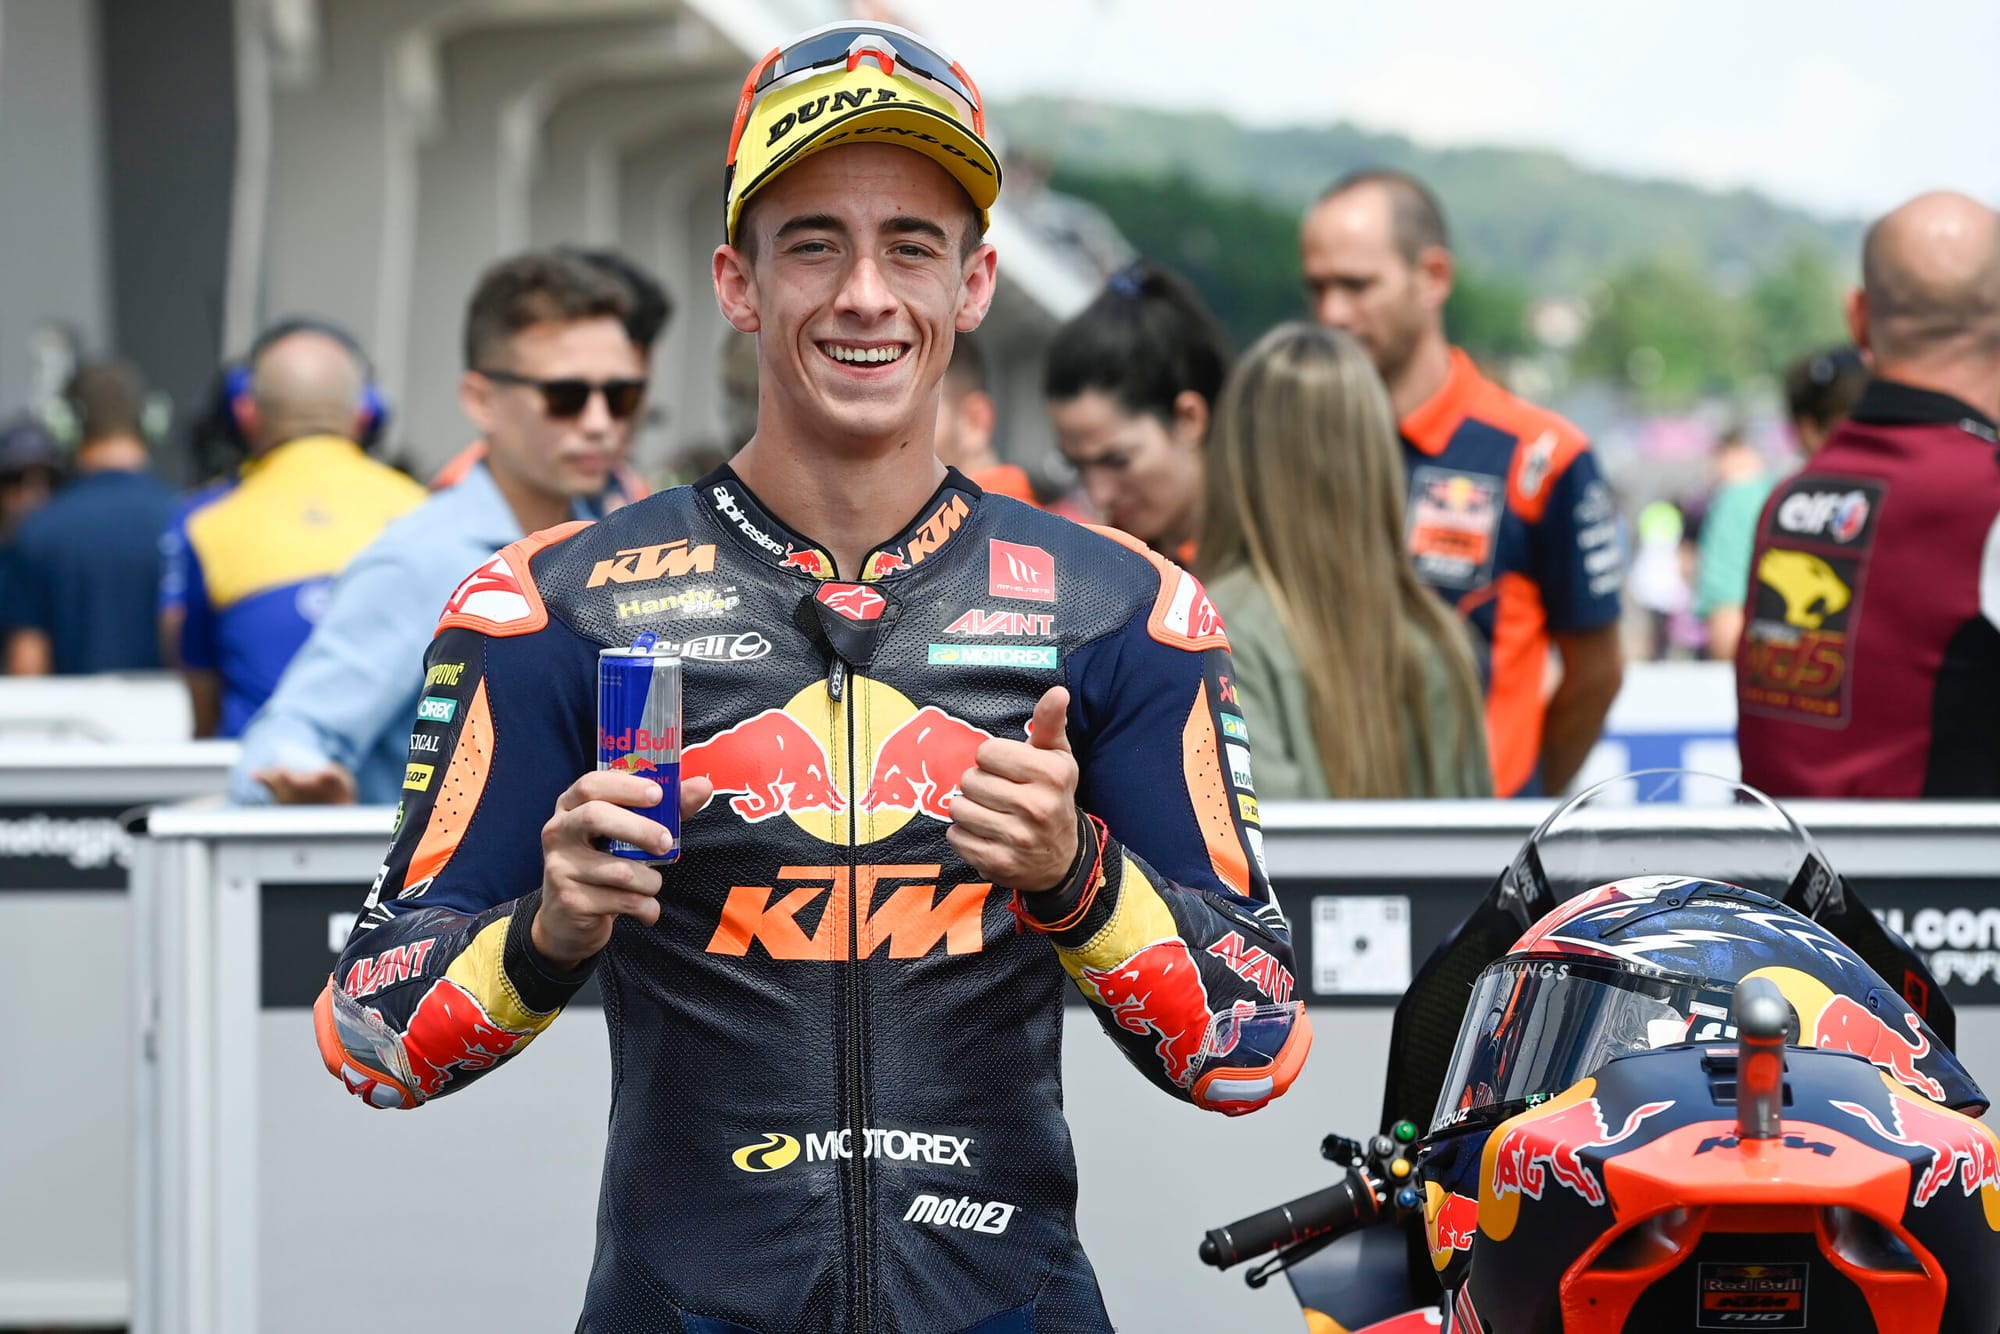 Acosta sacré champion du monde Moto2 si...